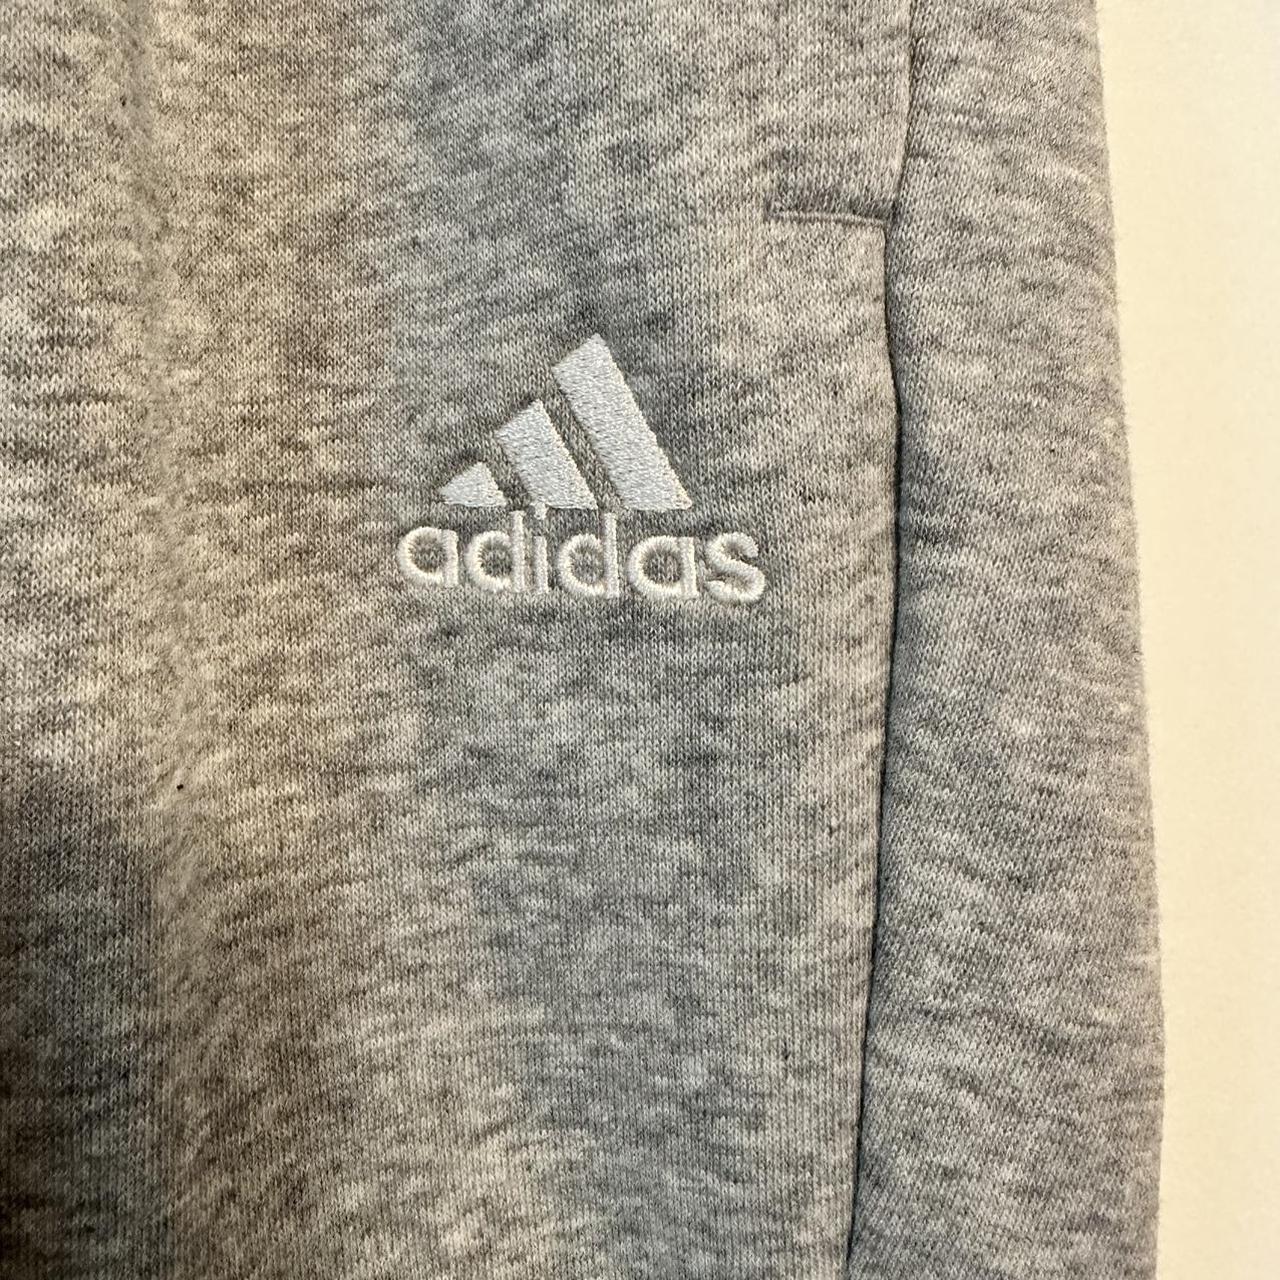 Adidas Sweatpants Women Large Gray Louisville - Depop